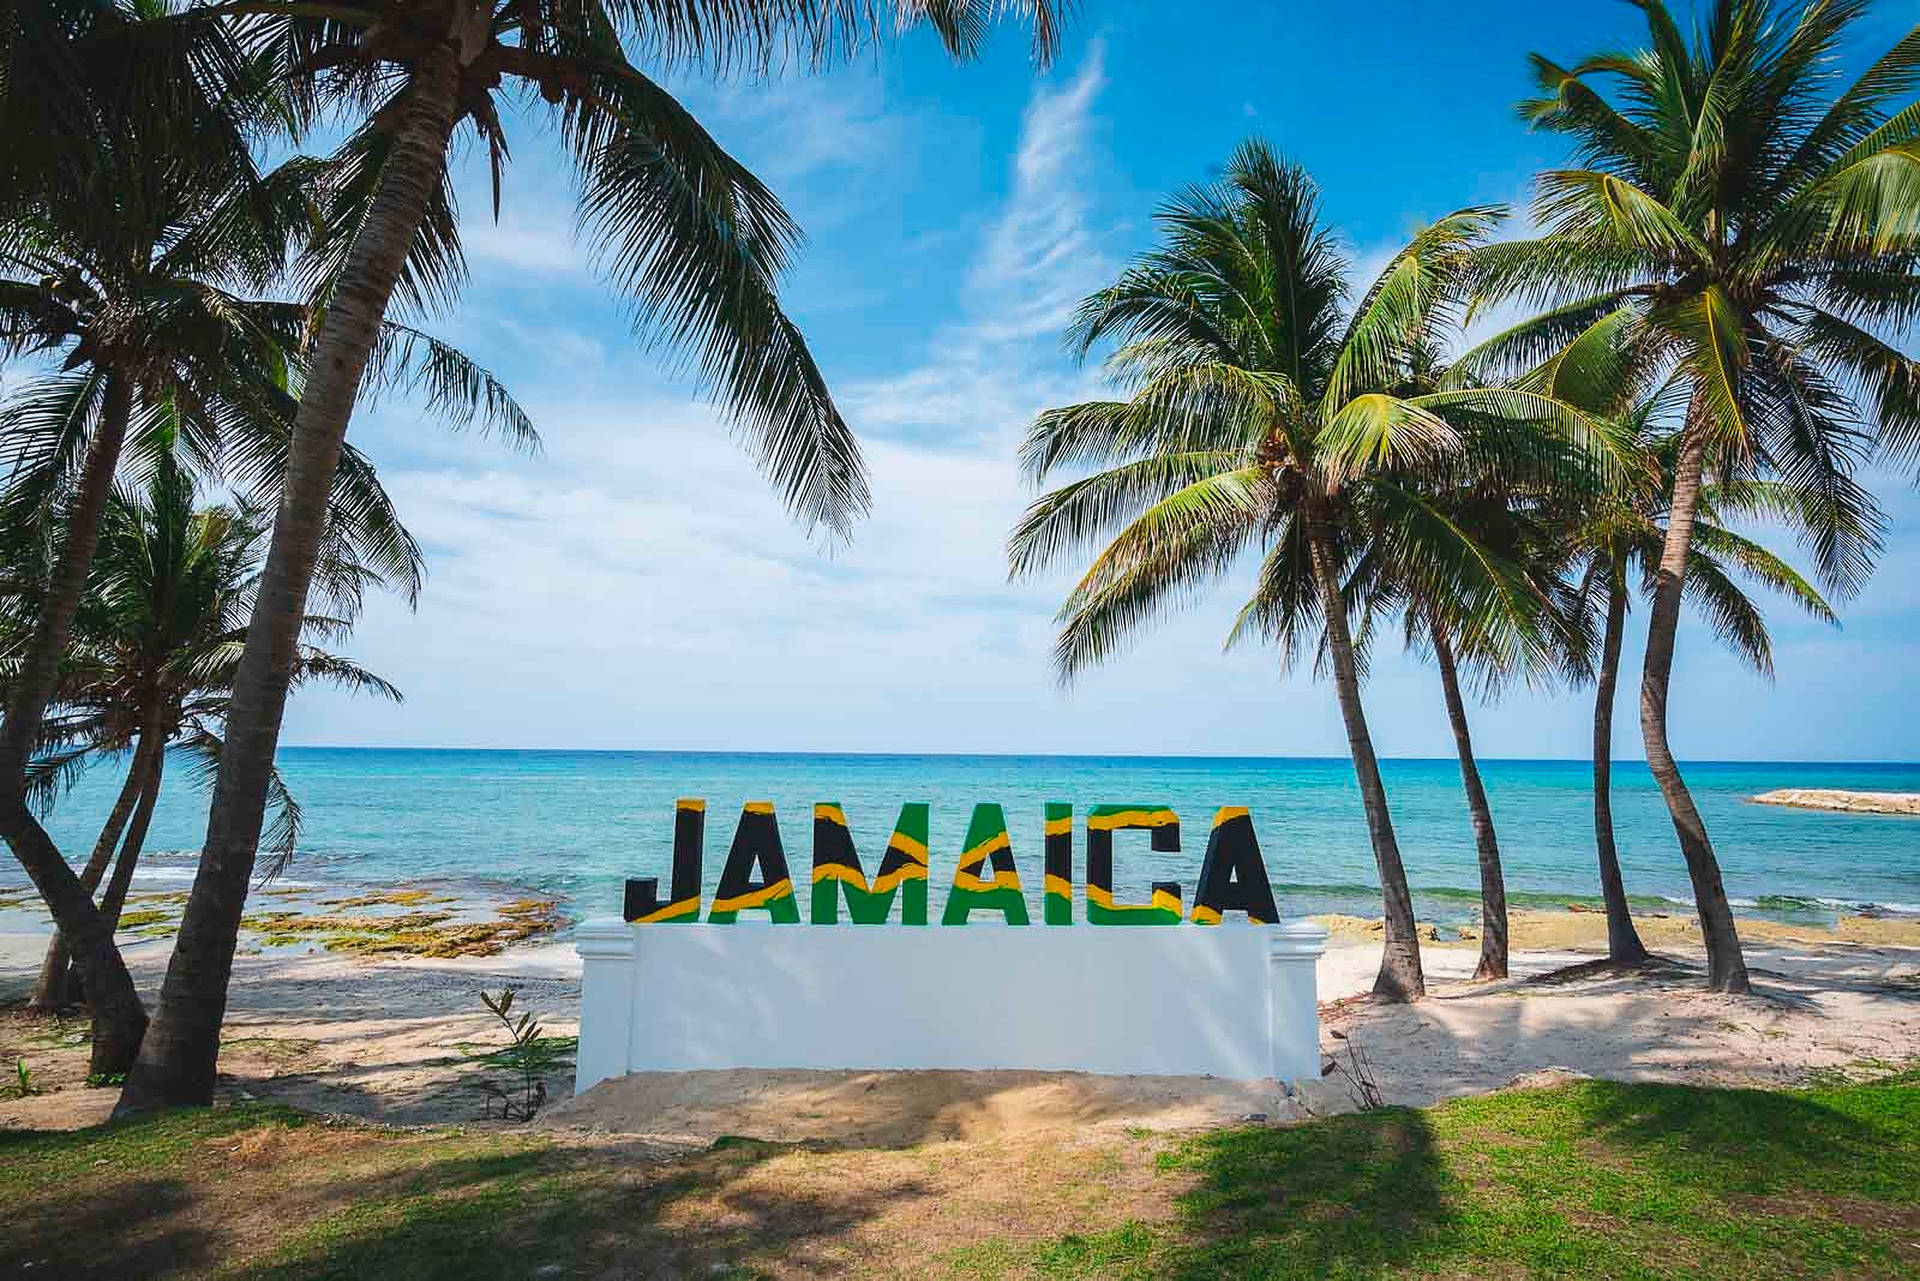 Jamaica Beach Logo Flagge Wallpaper: Jamaica Strand Logo Flag Wallpaper Wallpaper